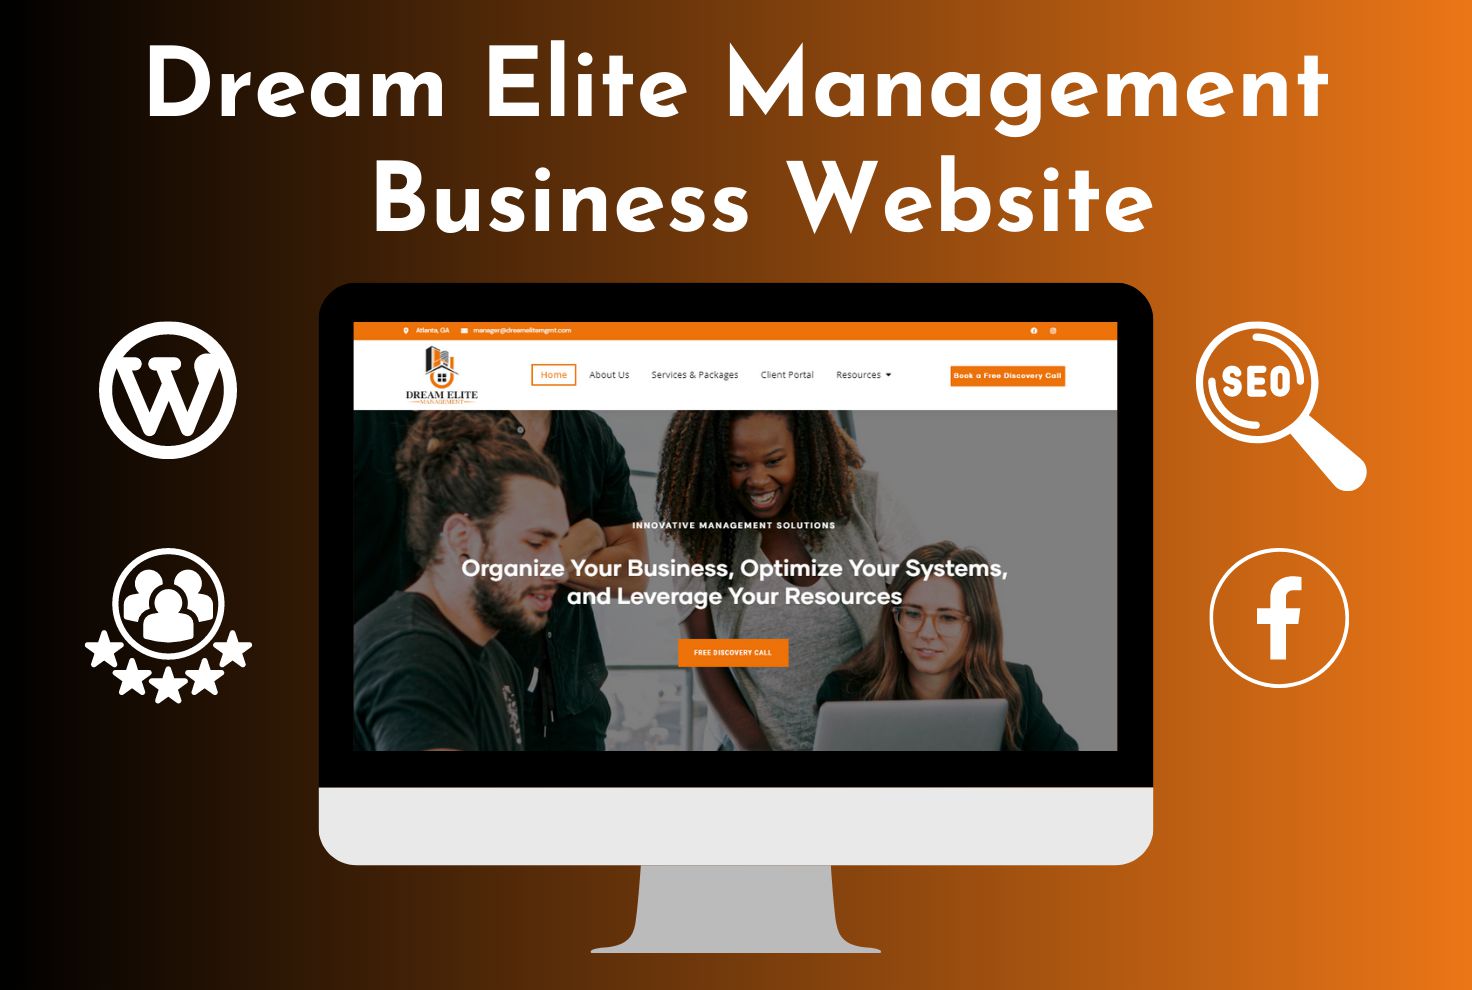 Dream Elite Management Business website